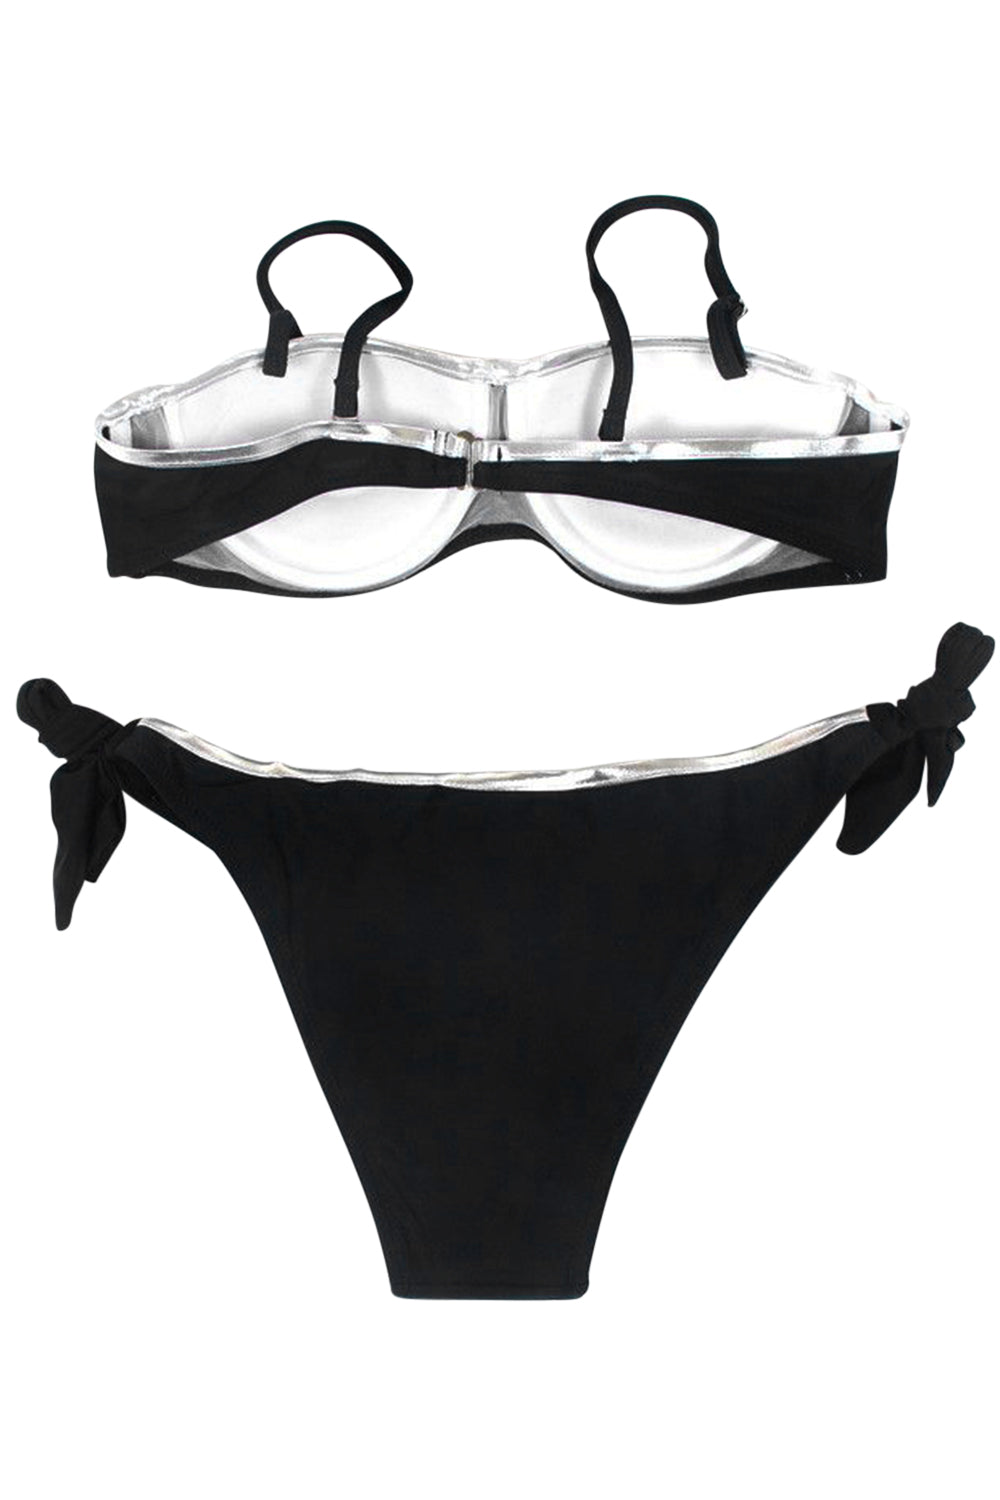 Iyasson Womens Low Rise Two Pieces Padded Bikini Set